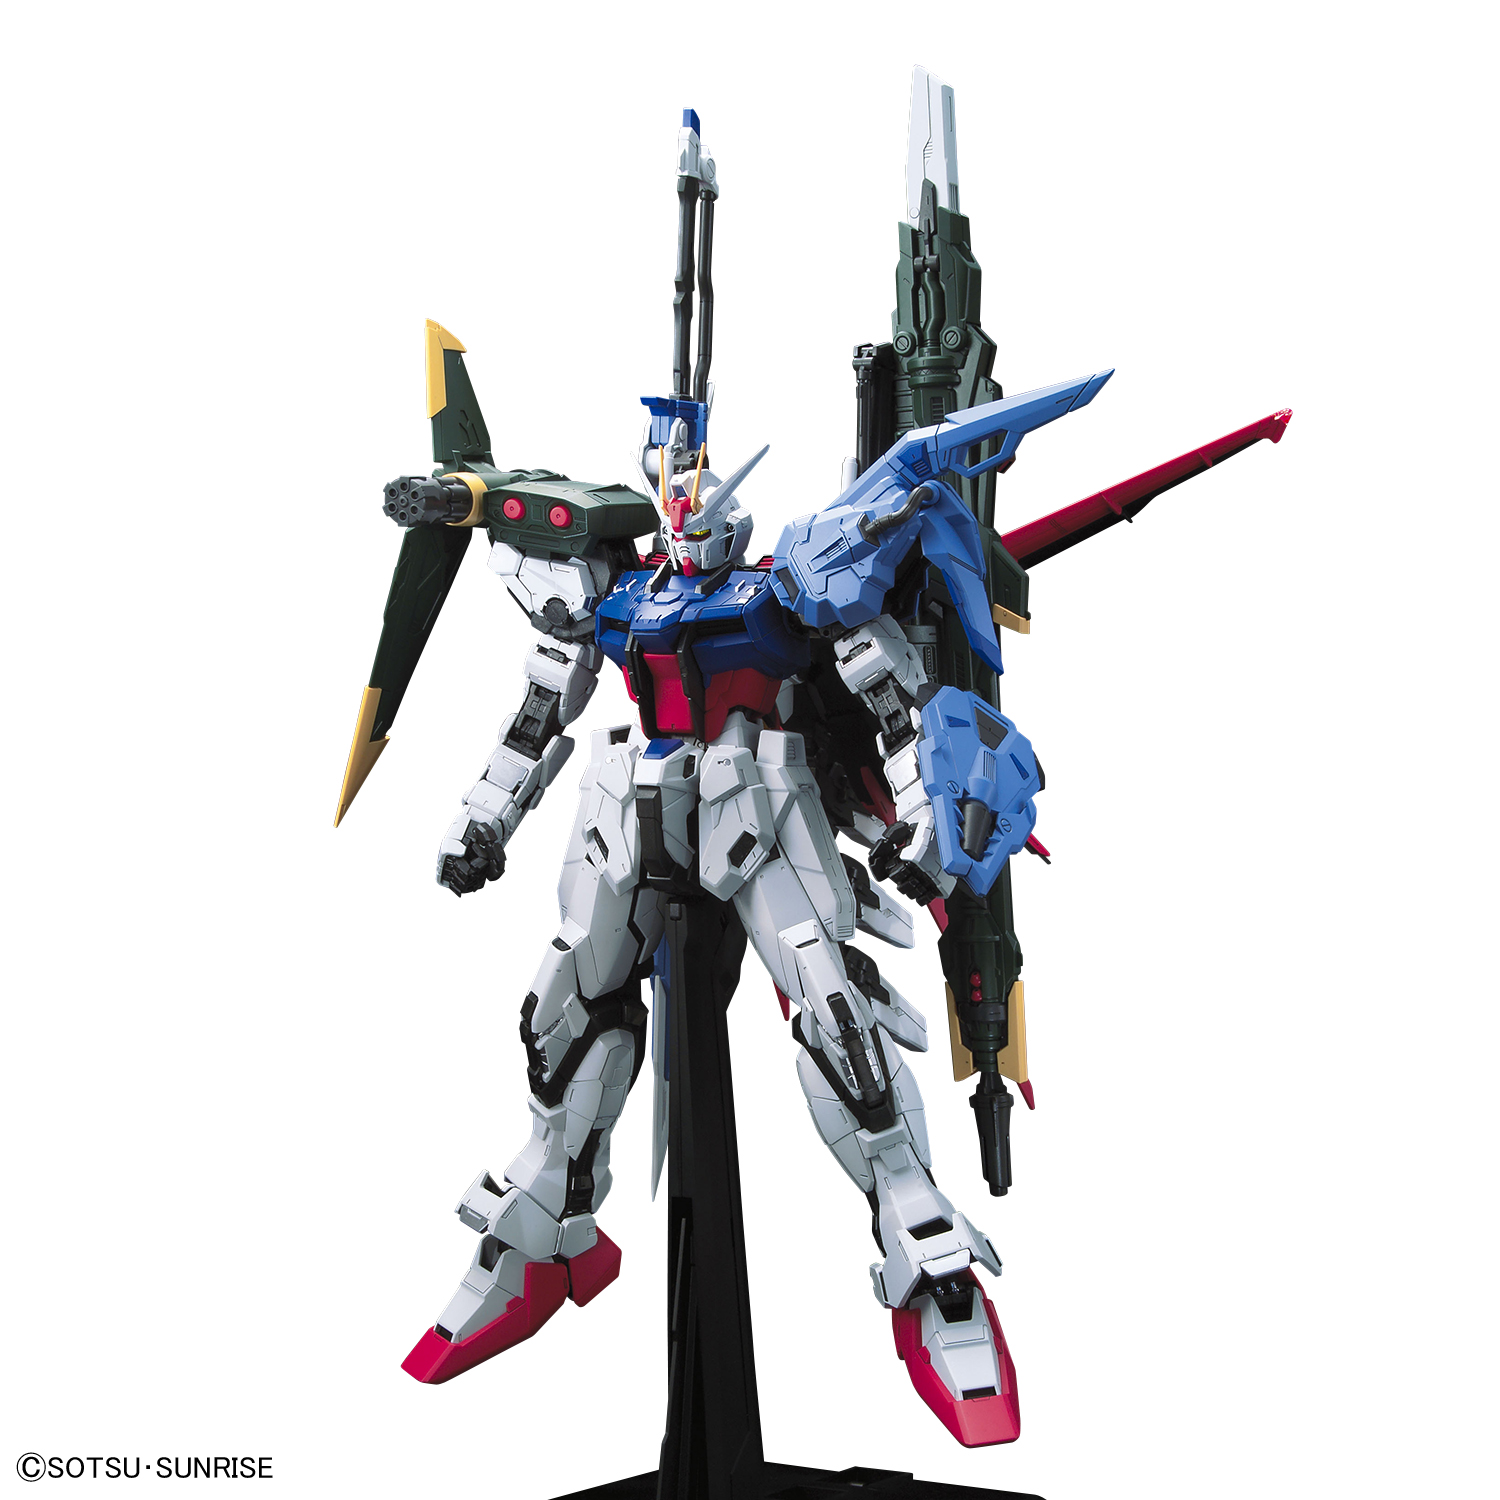 Gunpla PG 1/60 Gundam Seed Perfect Strike Gundam-Bandai-Ace Cards & Collectibles